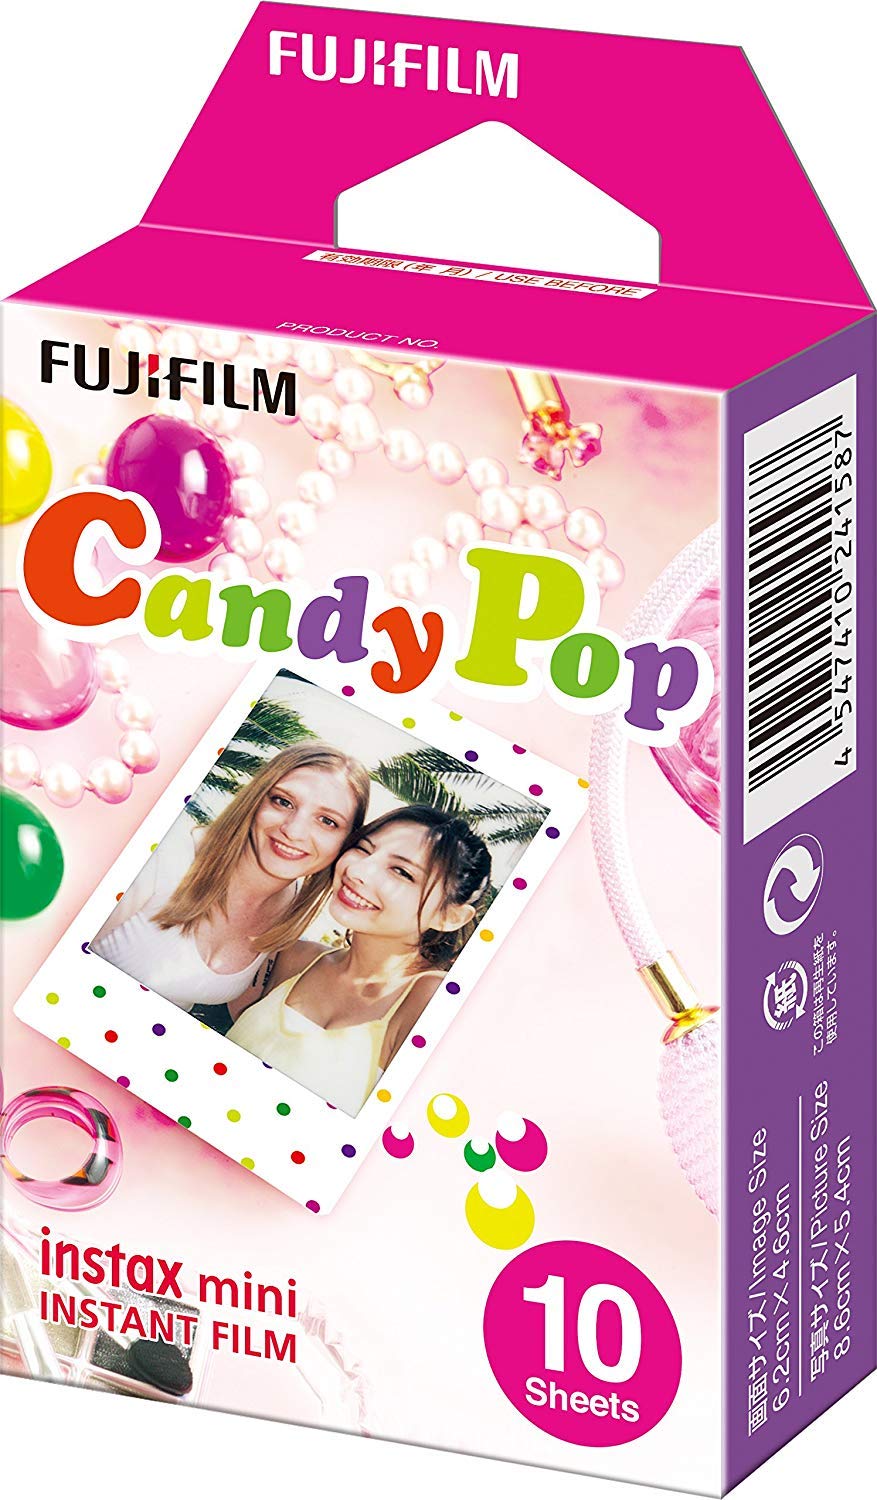  Fujifilm Instax Mini-Candy Pop Instant Film/10 Colour Prints-10 Sheets